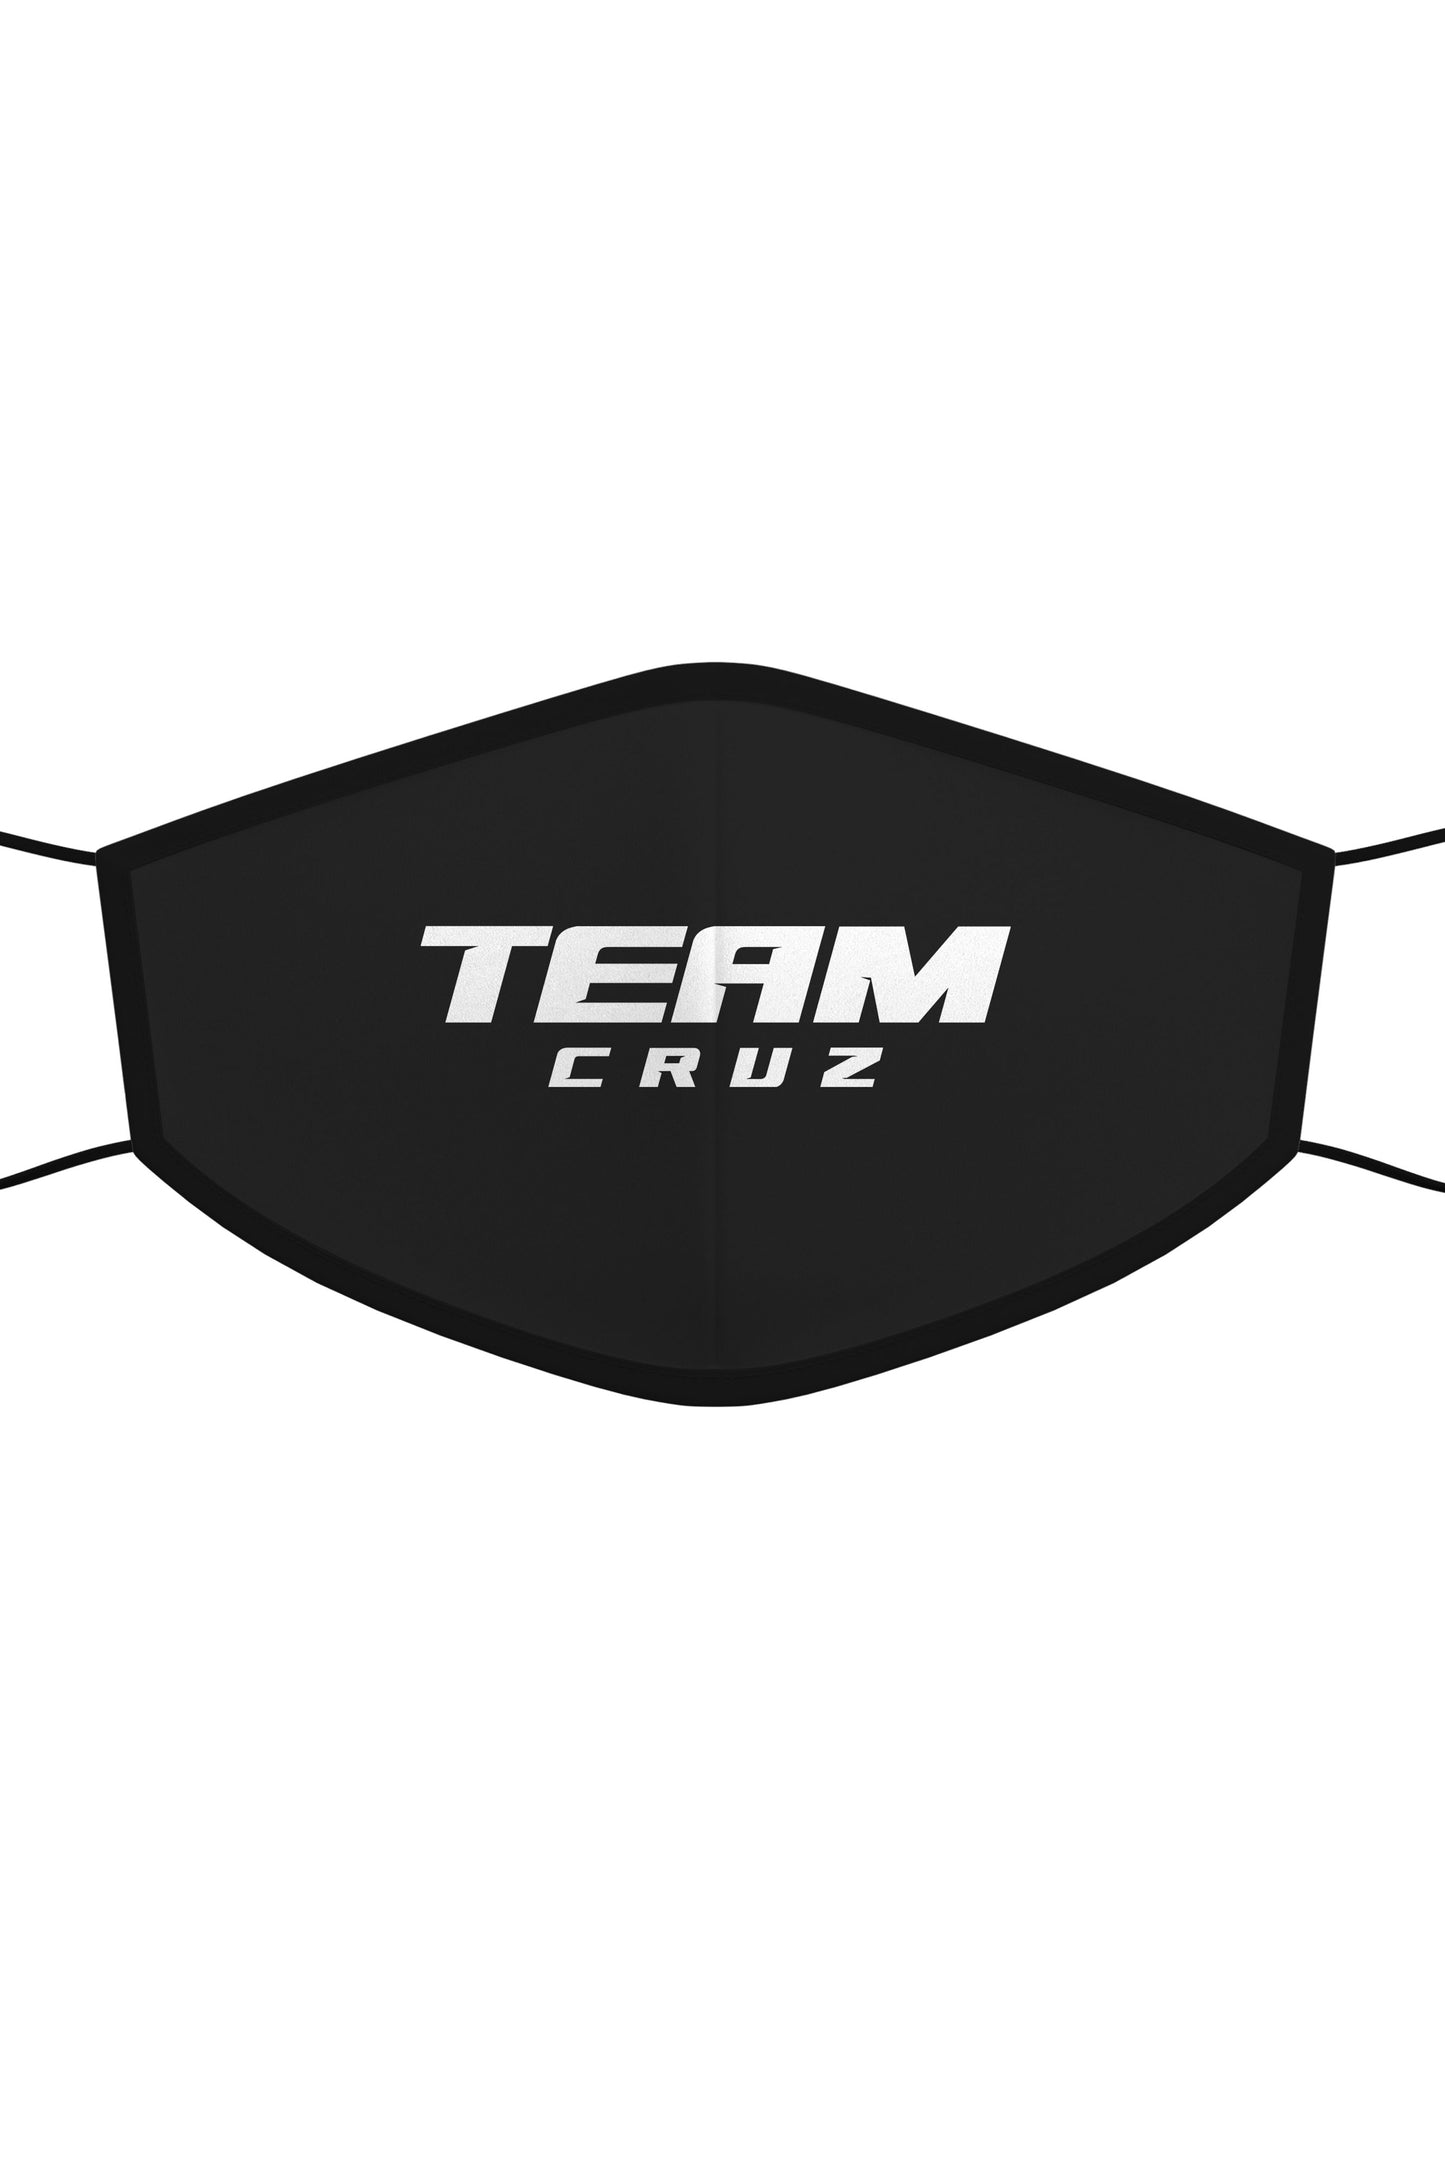 Dominick Cruz “TeamCruz” Mask